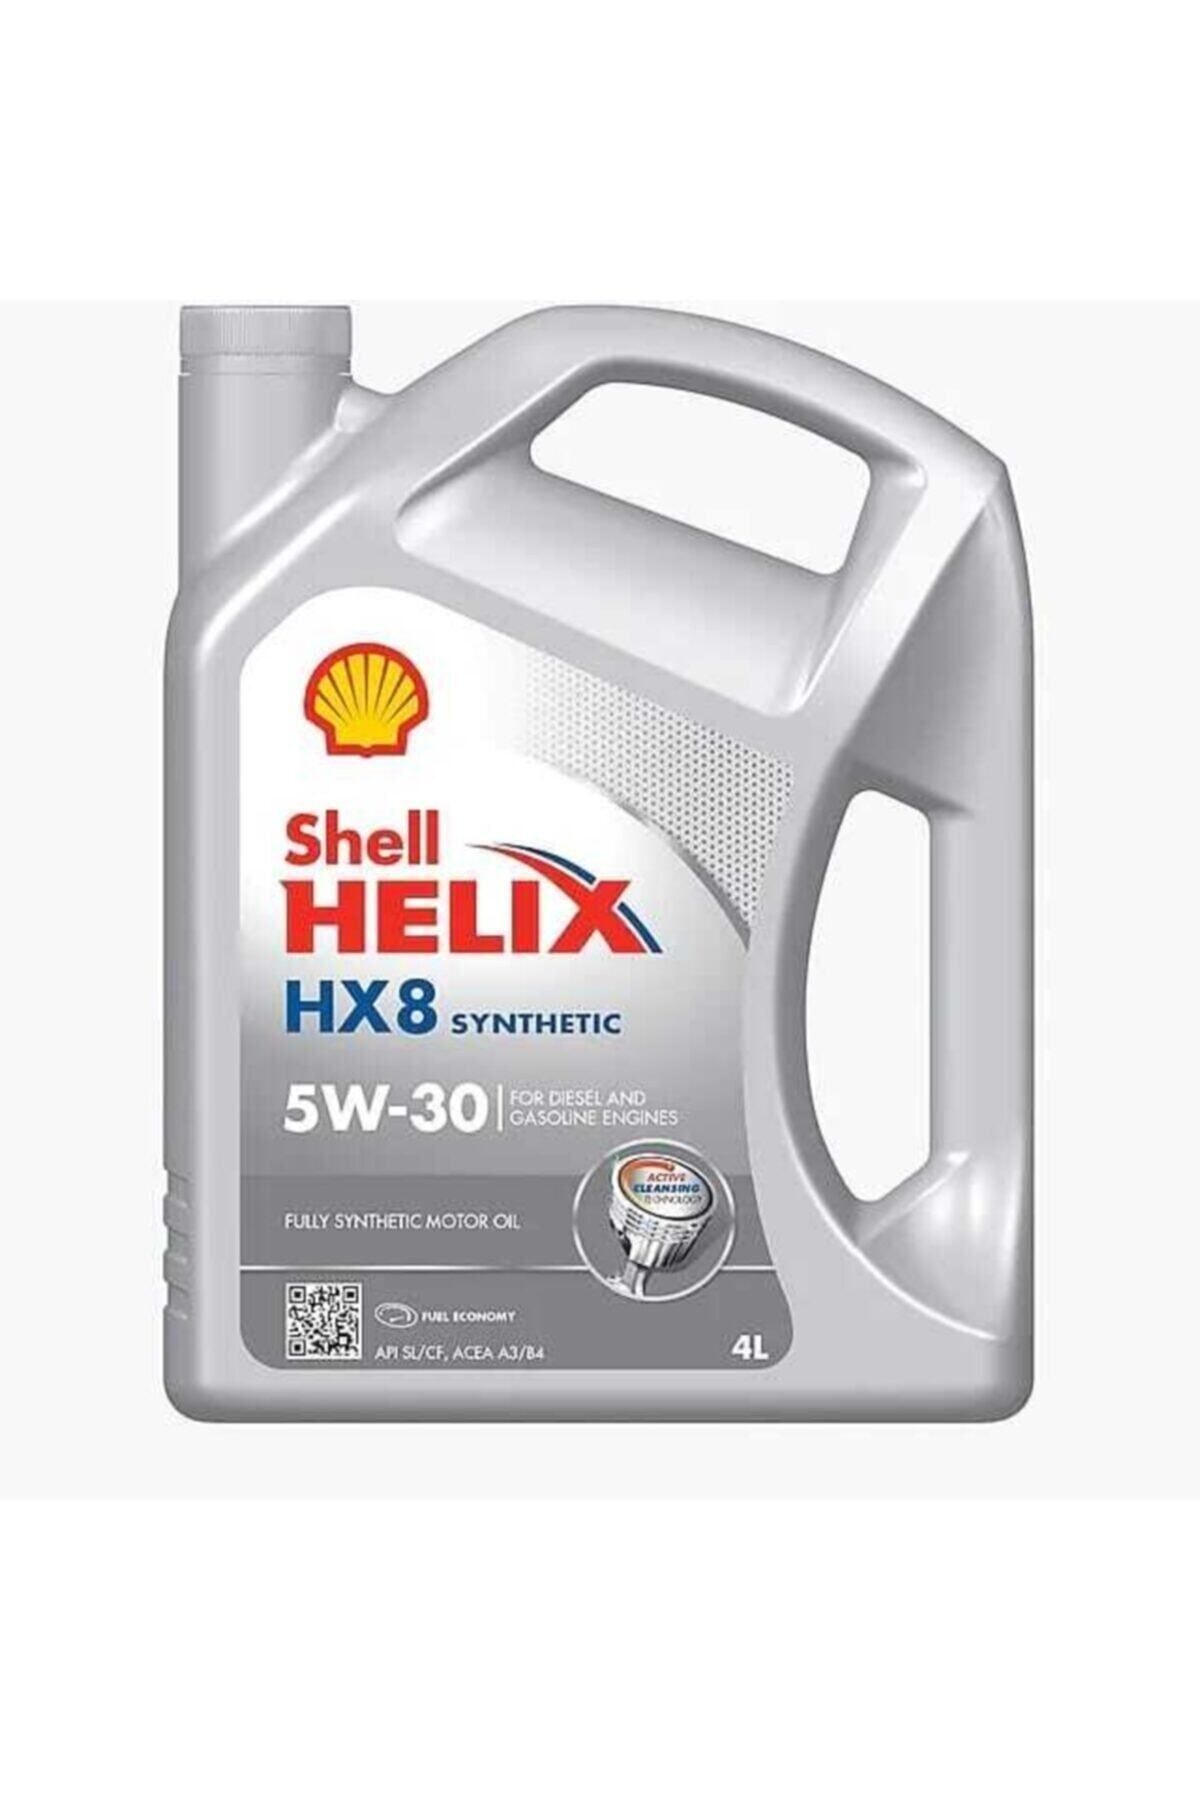 Shell Helix Hx8 Synthetic 5w-30 Dizel Benzinli